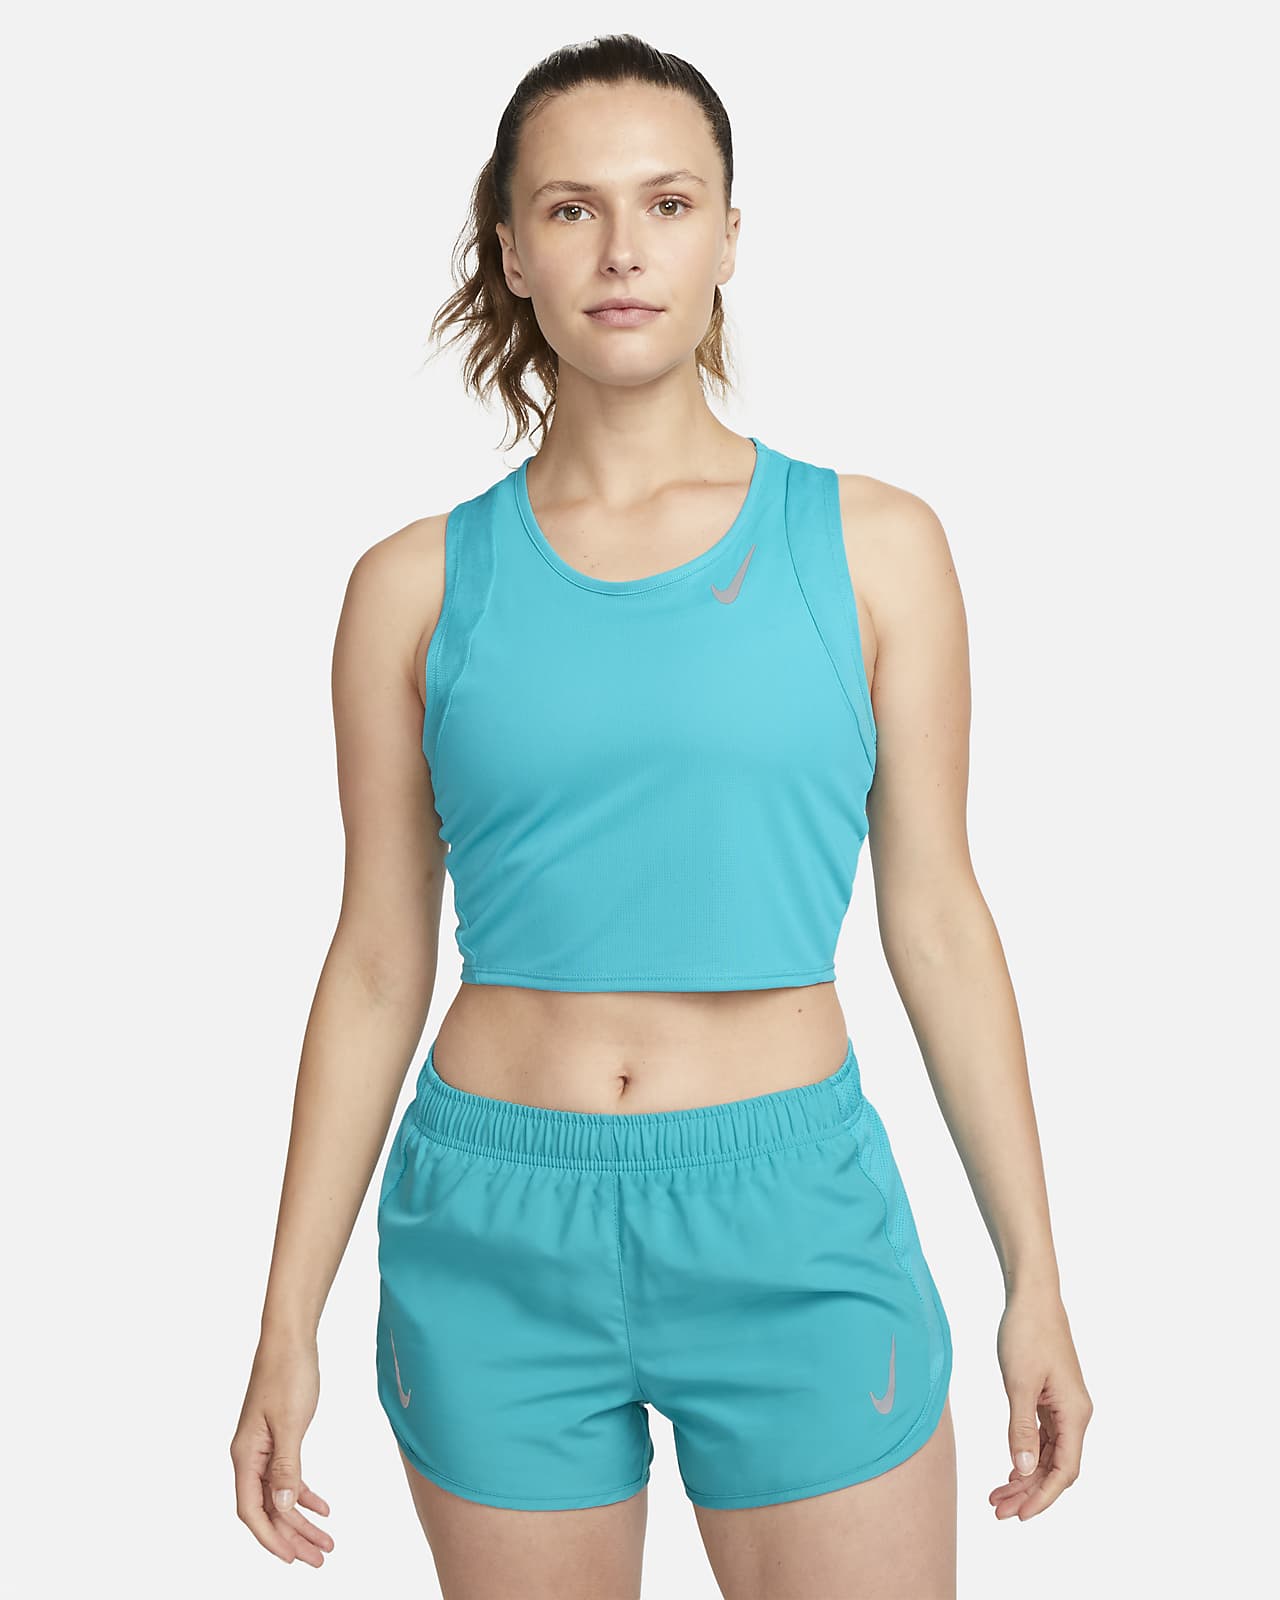 Women's Running Clothes. Nike HR